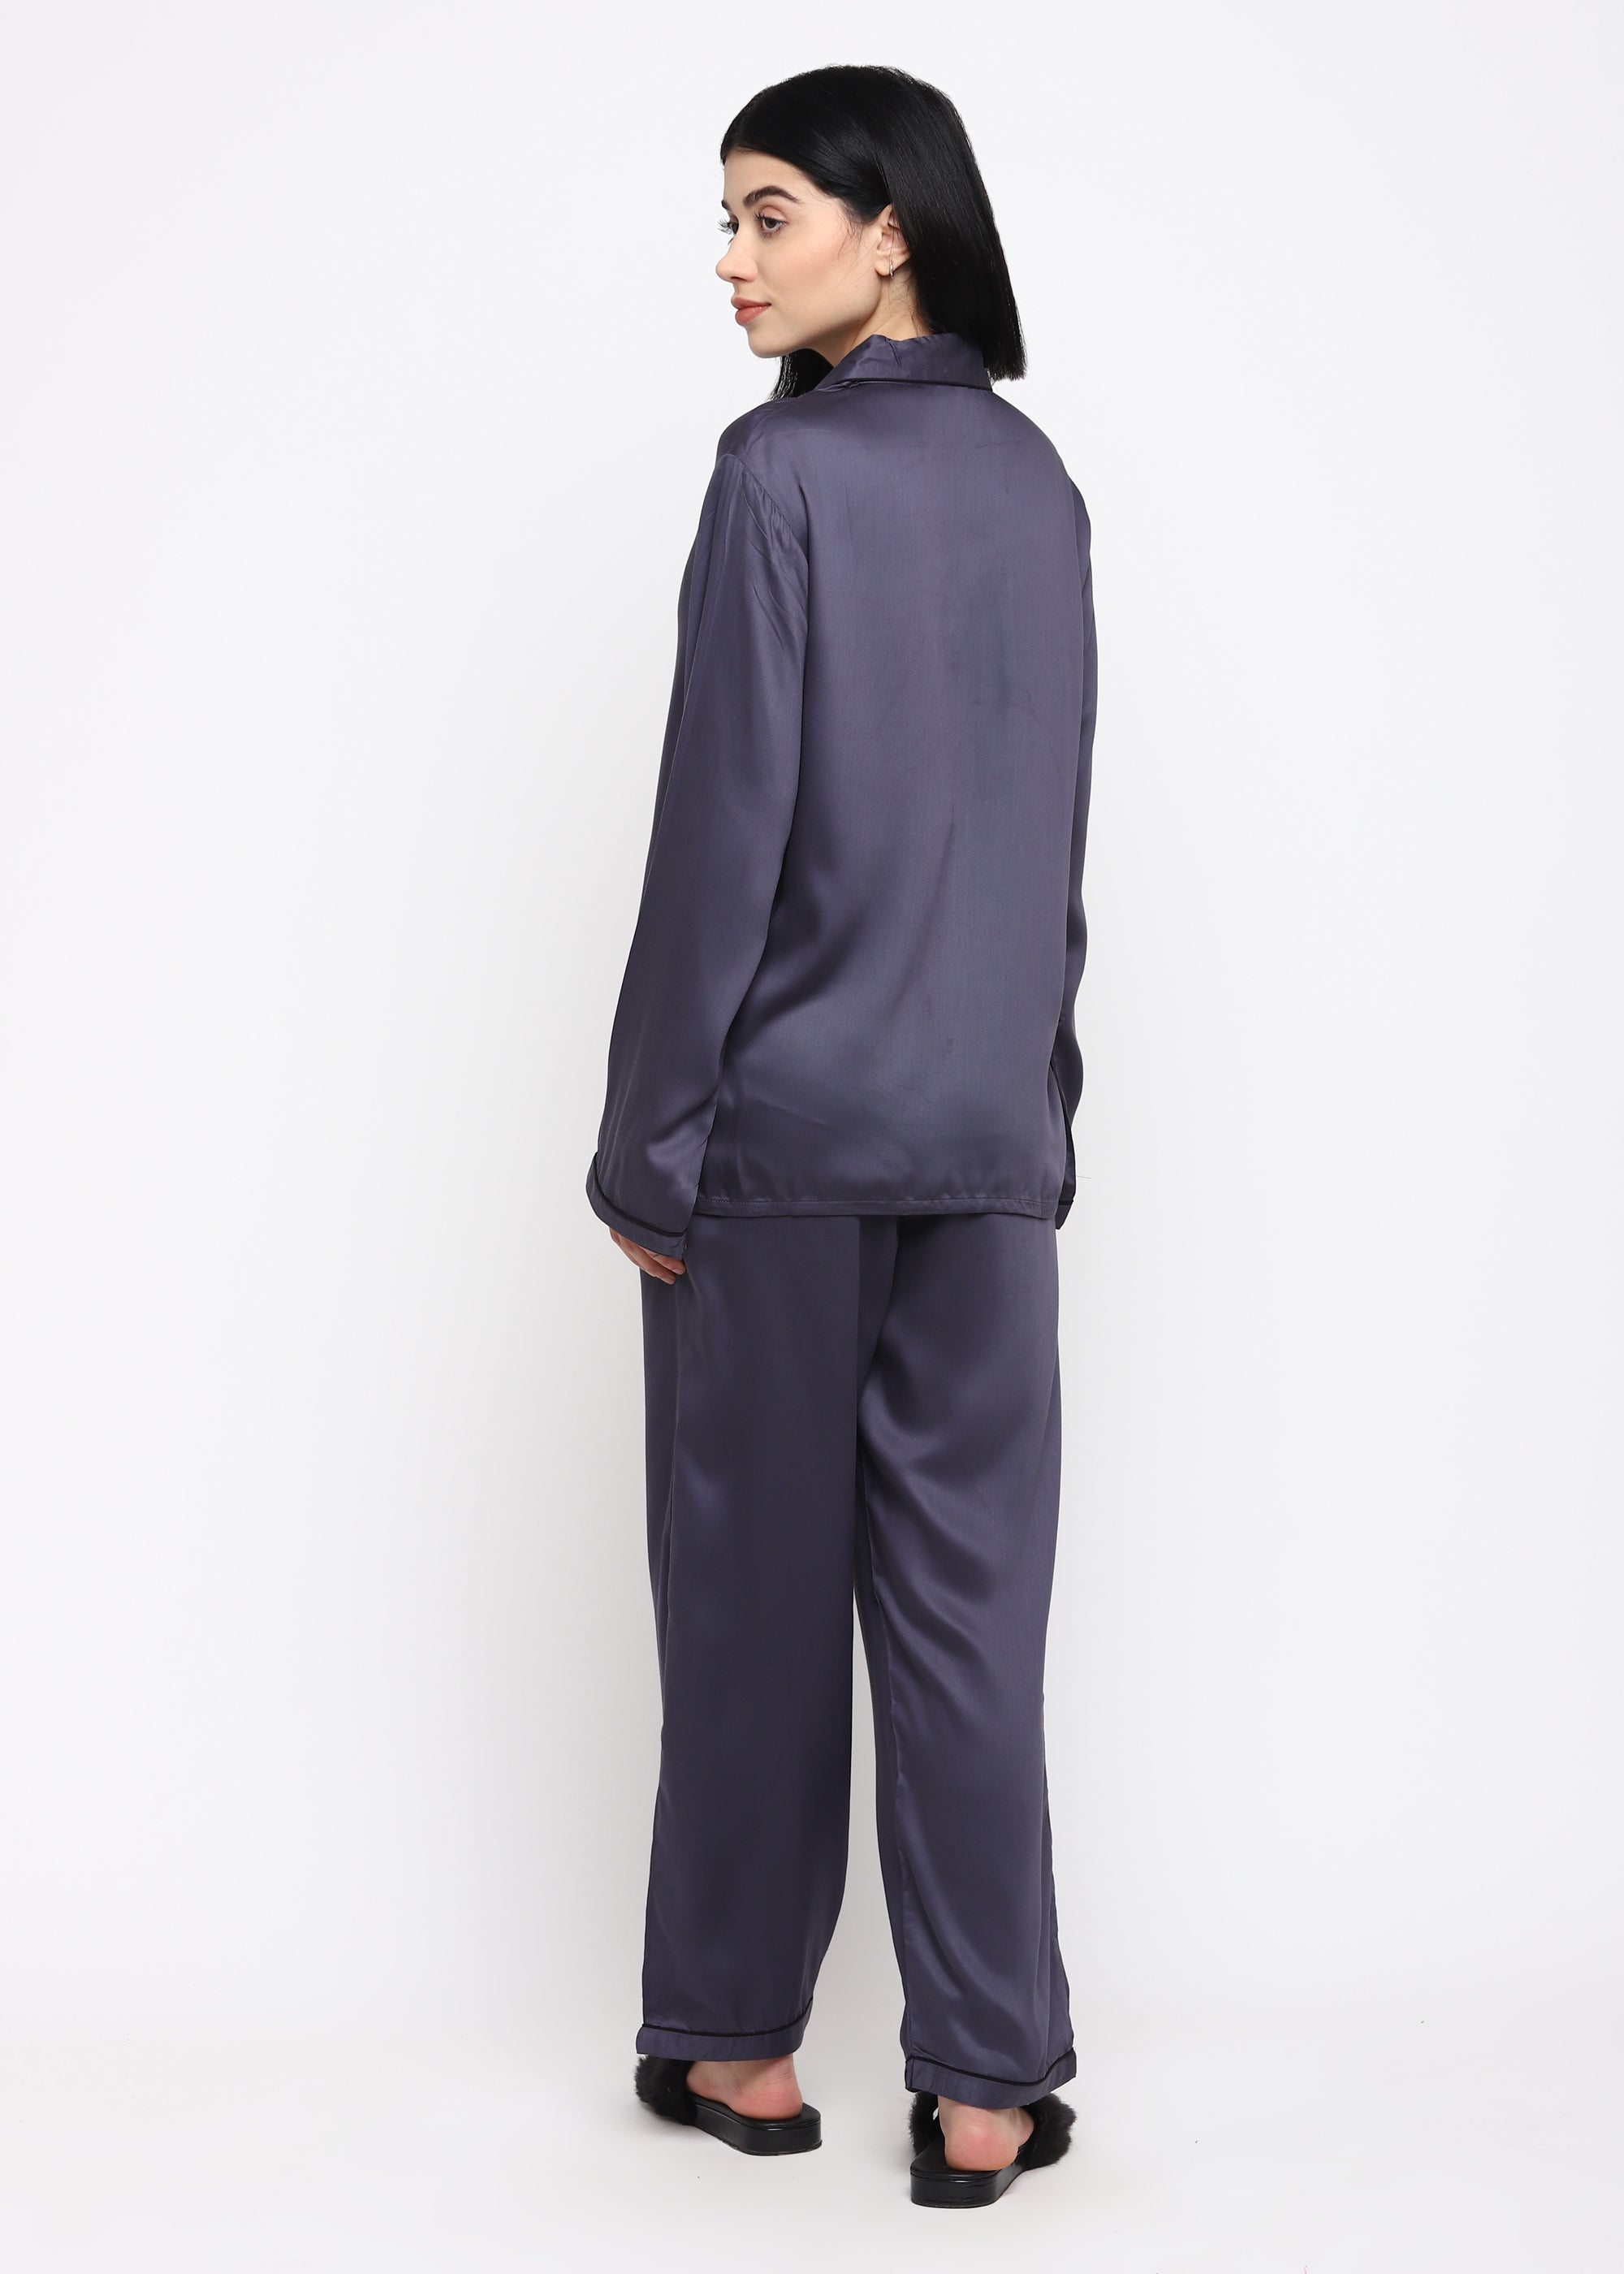 Ultra Soft Dark Grey Modal Satin Long Sleeve Women's Night Suit - Shopbloom